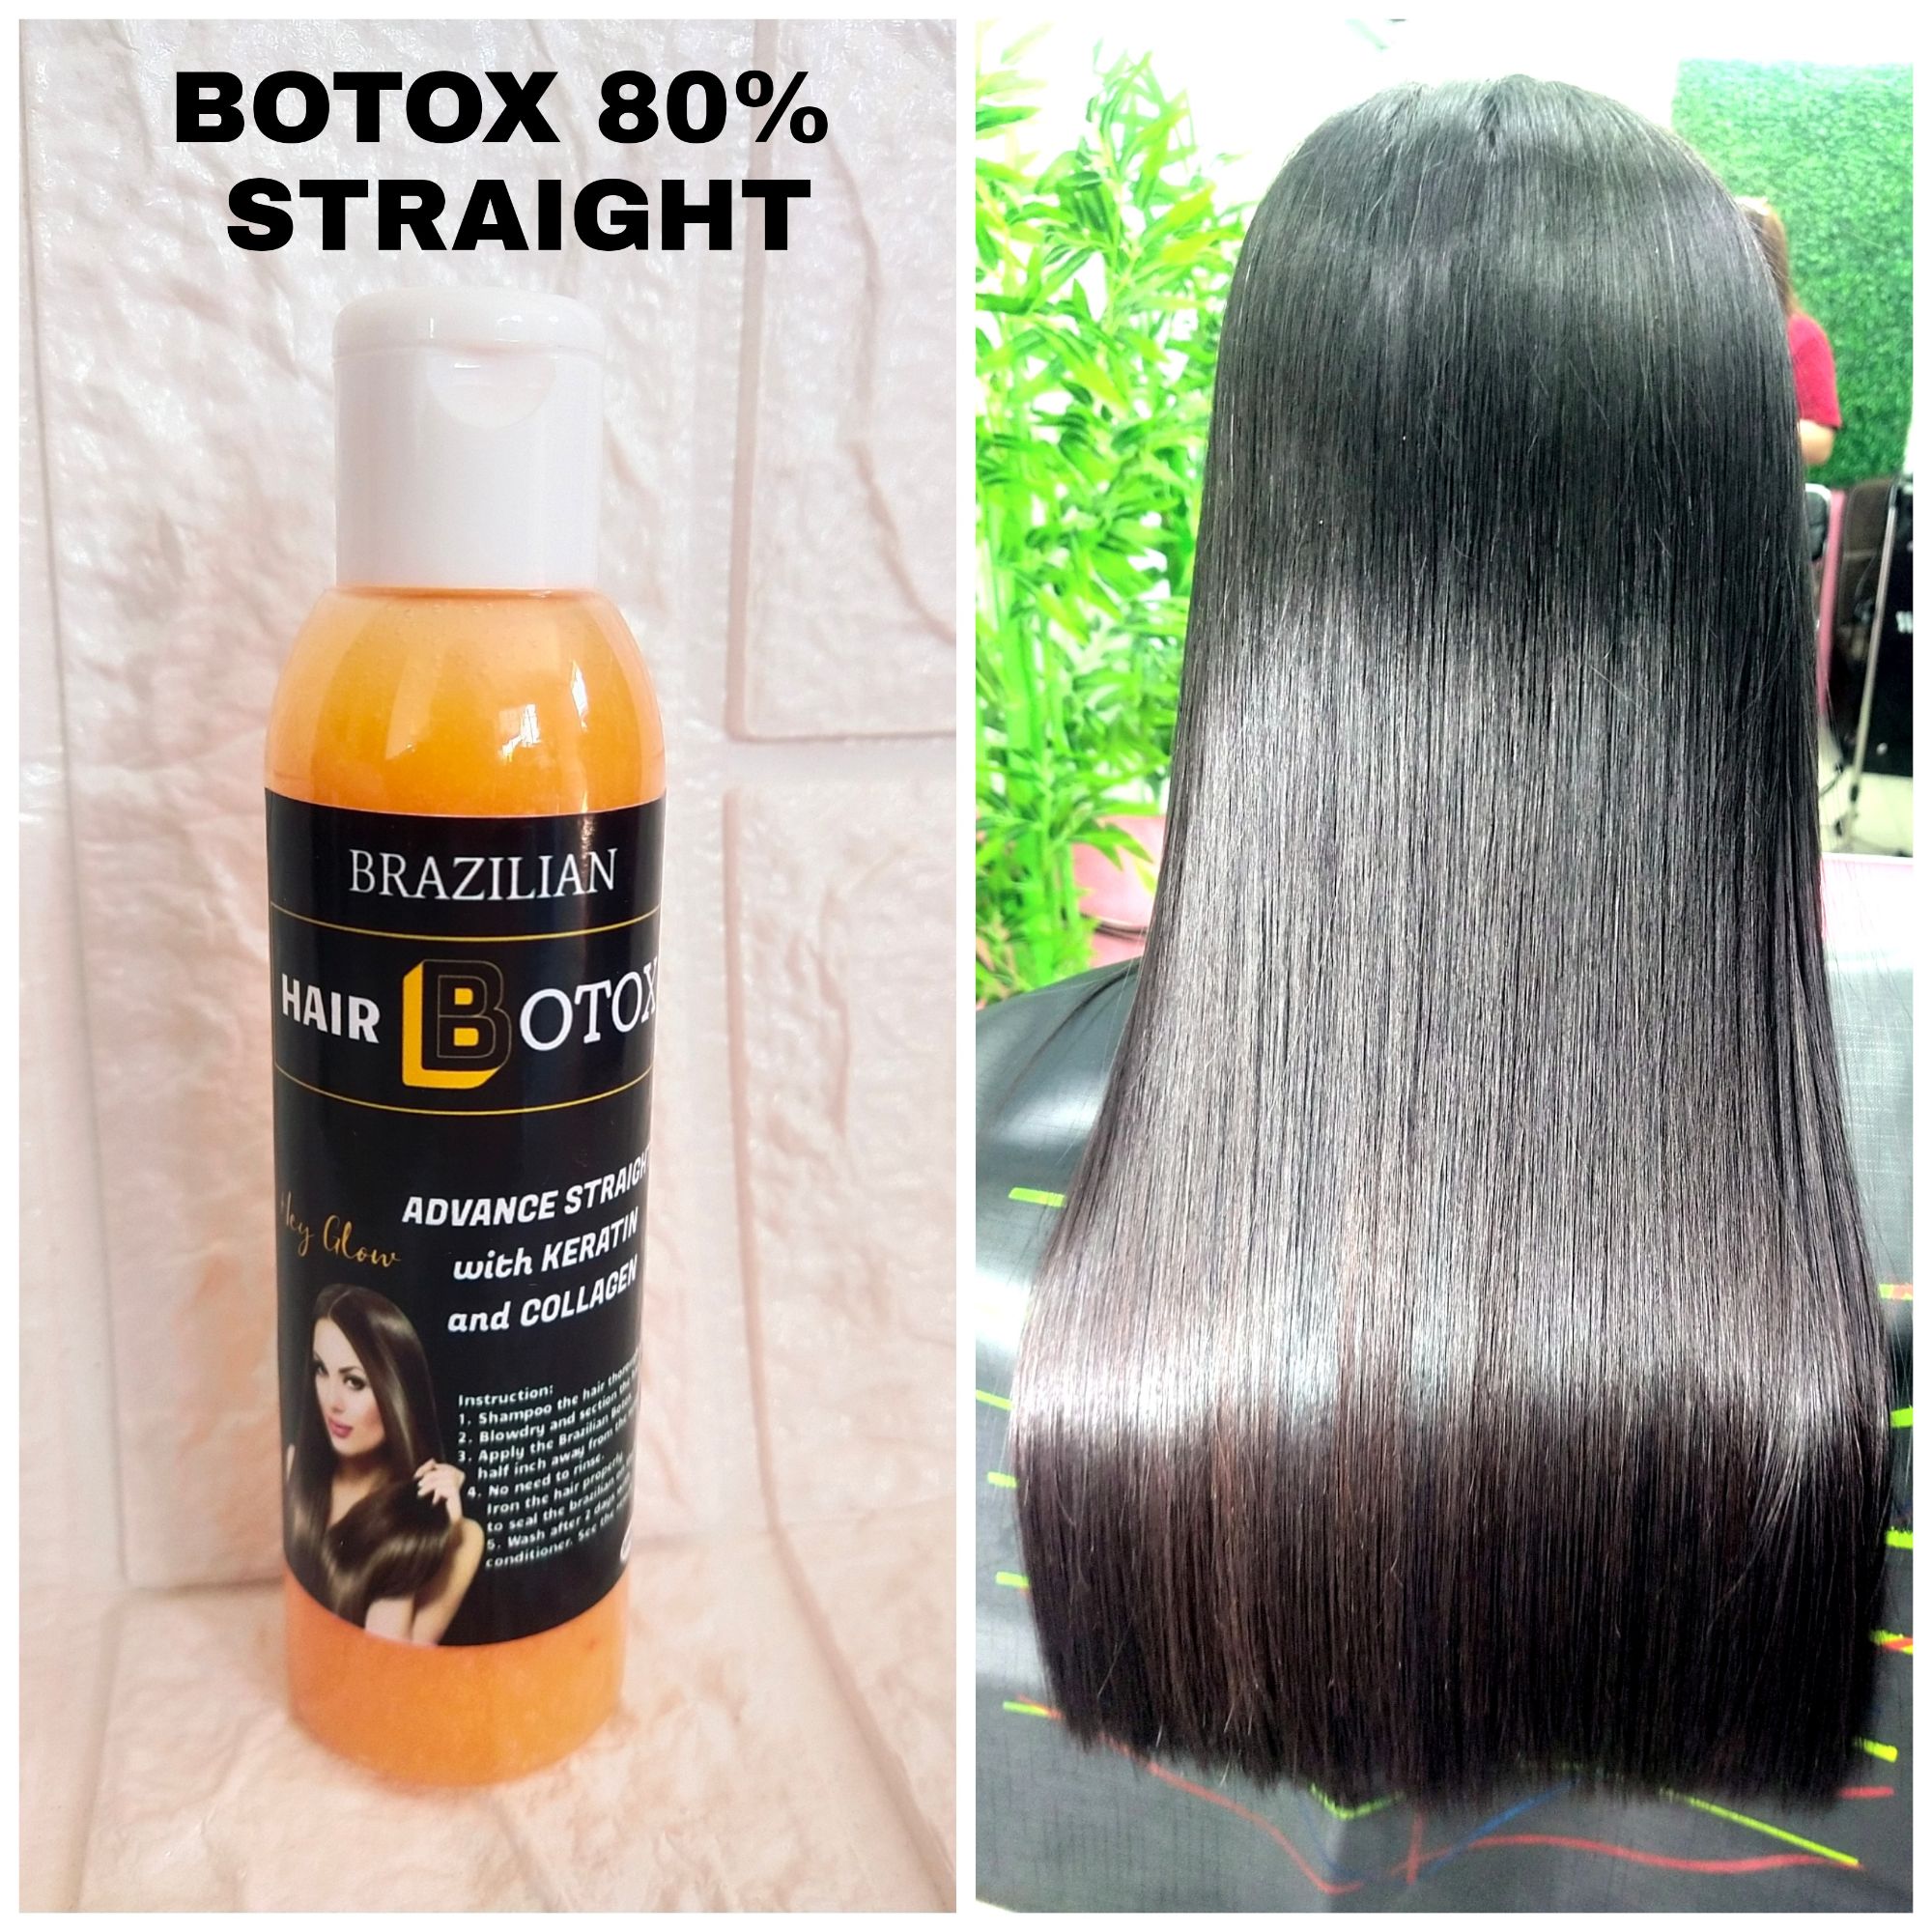 BRAZILIAN HAIR BOTOX 80% STRAIGHT | Lazada PH